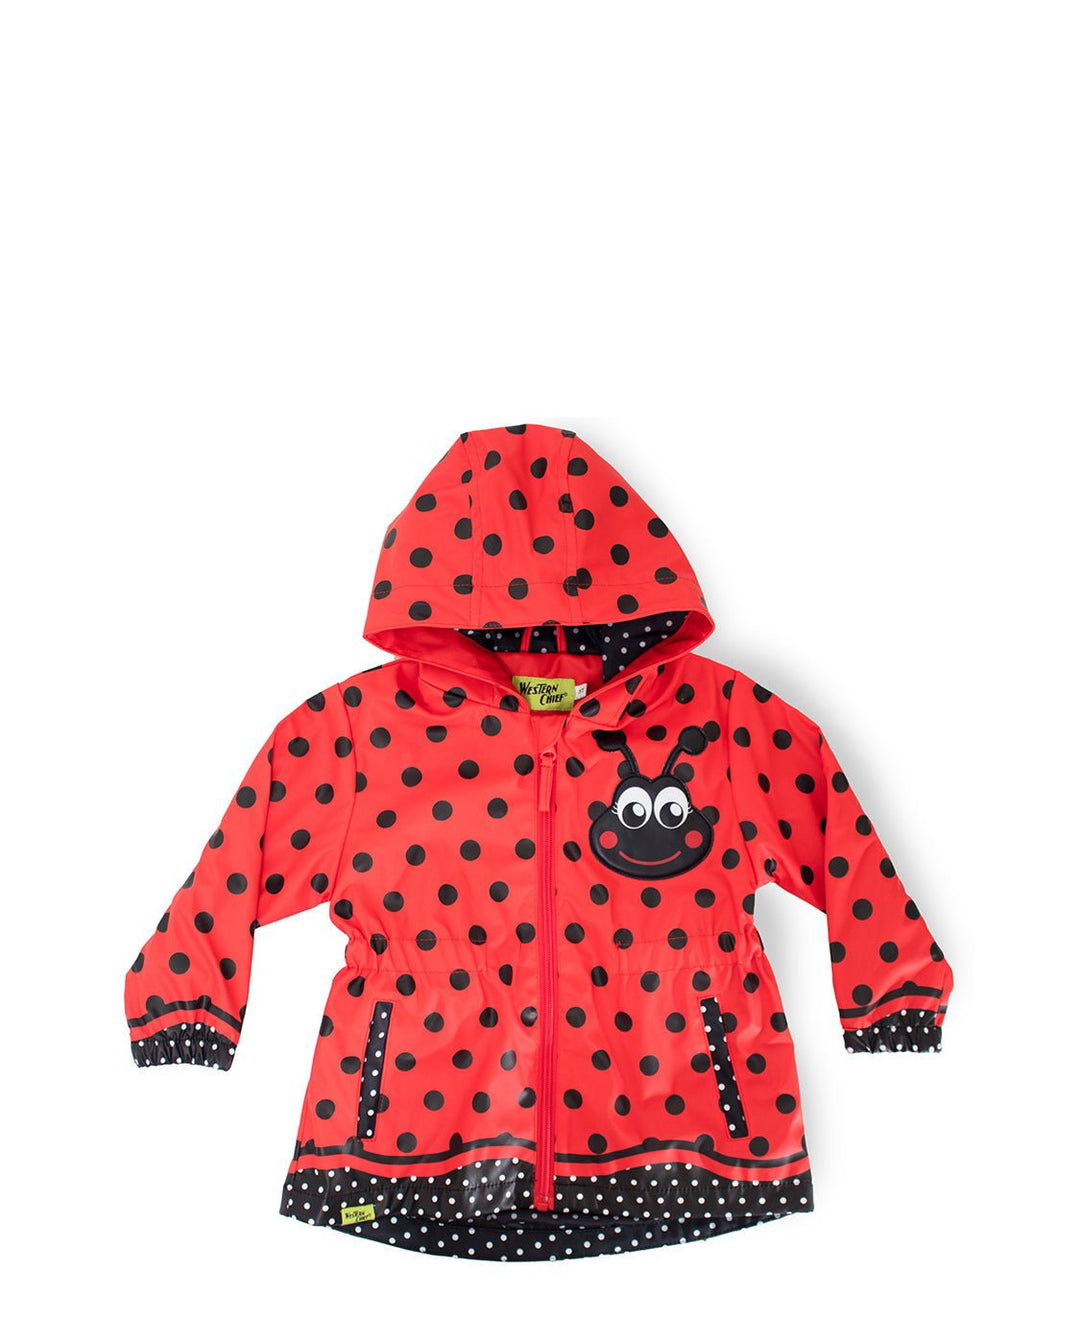 Kids Lucy Ladybug Raincoat - Red - WSC B2B